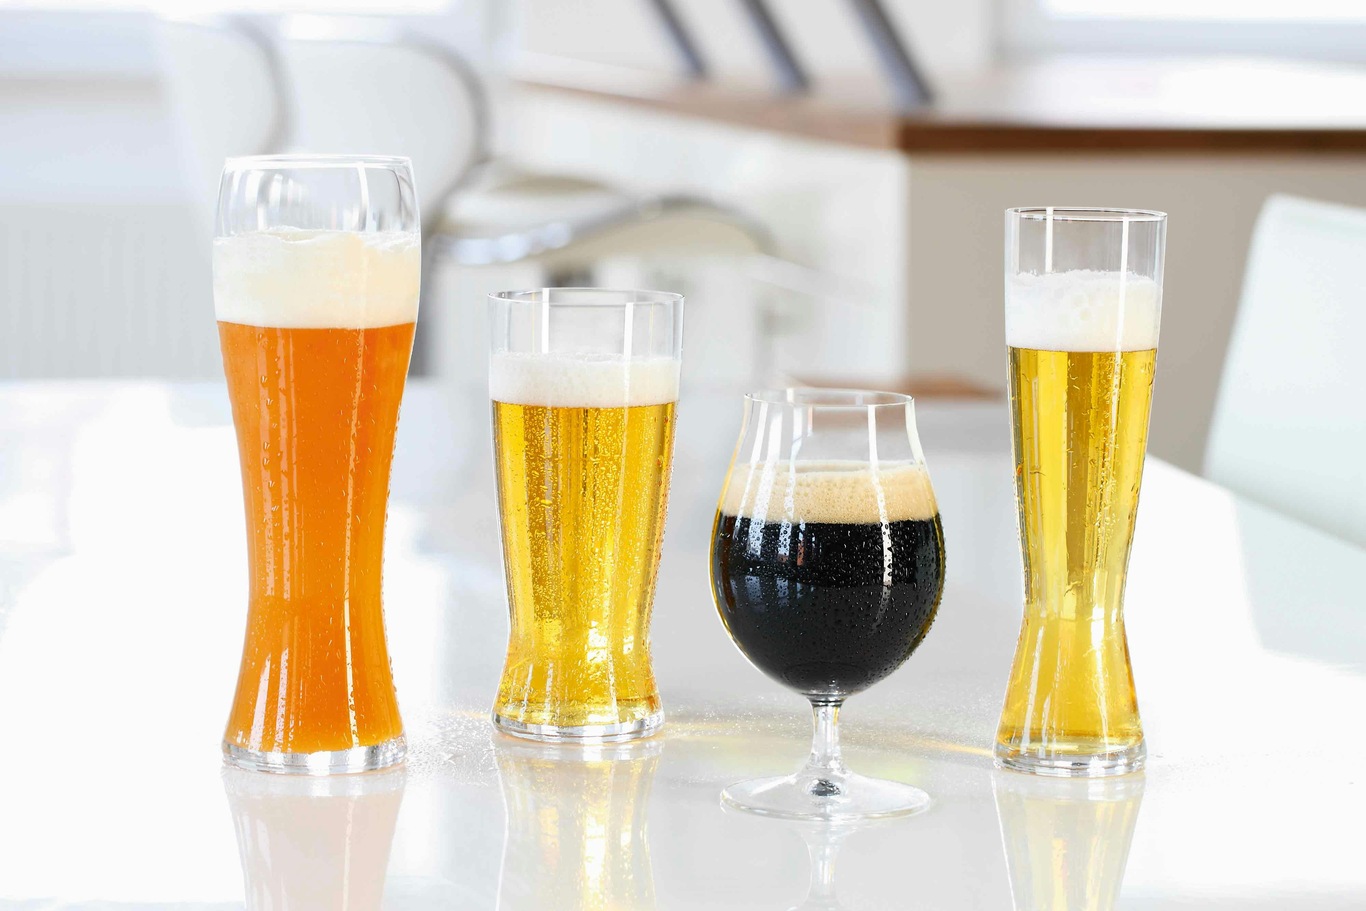 https://royaldesign.com/image/2/spiegelau-beer-classics-tall-pilsner-set-of-4-43-cl-3?w=800&quality=80